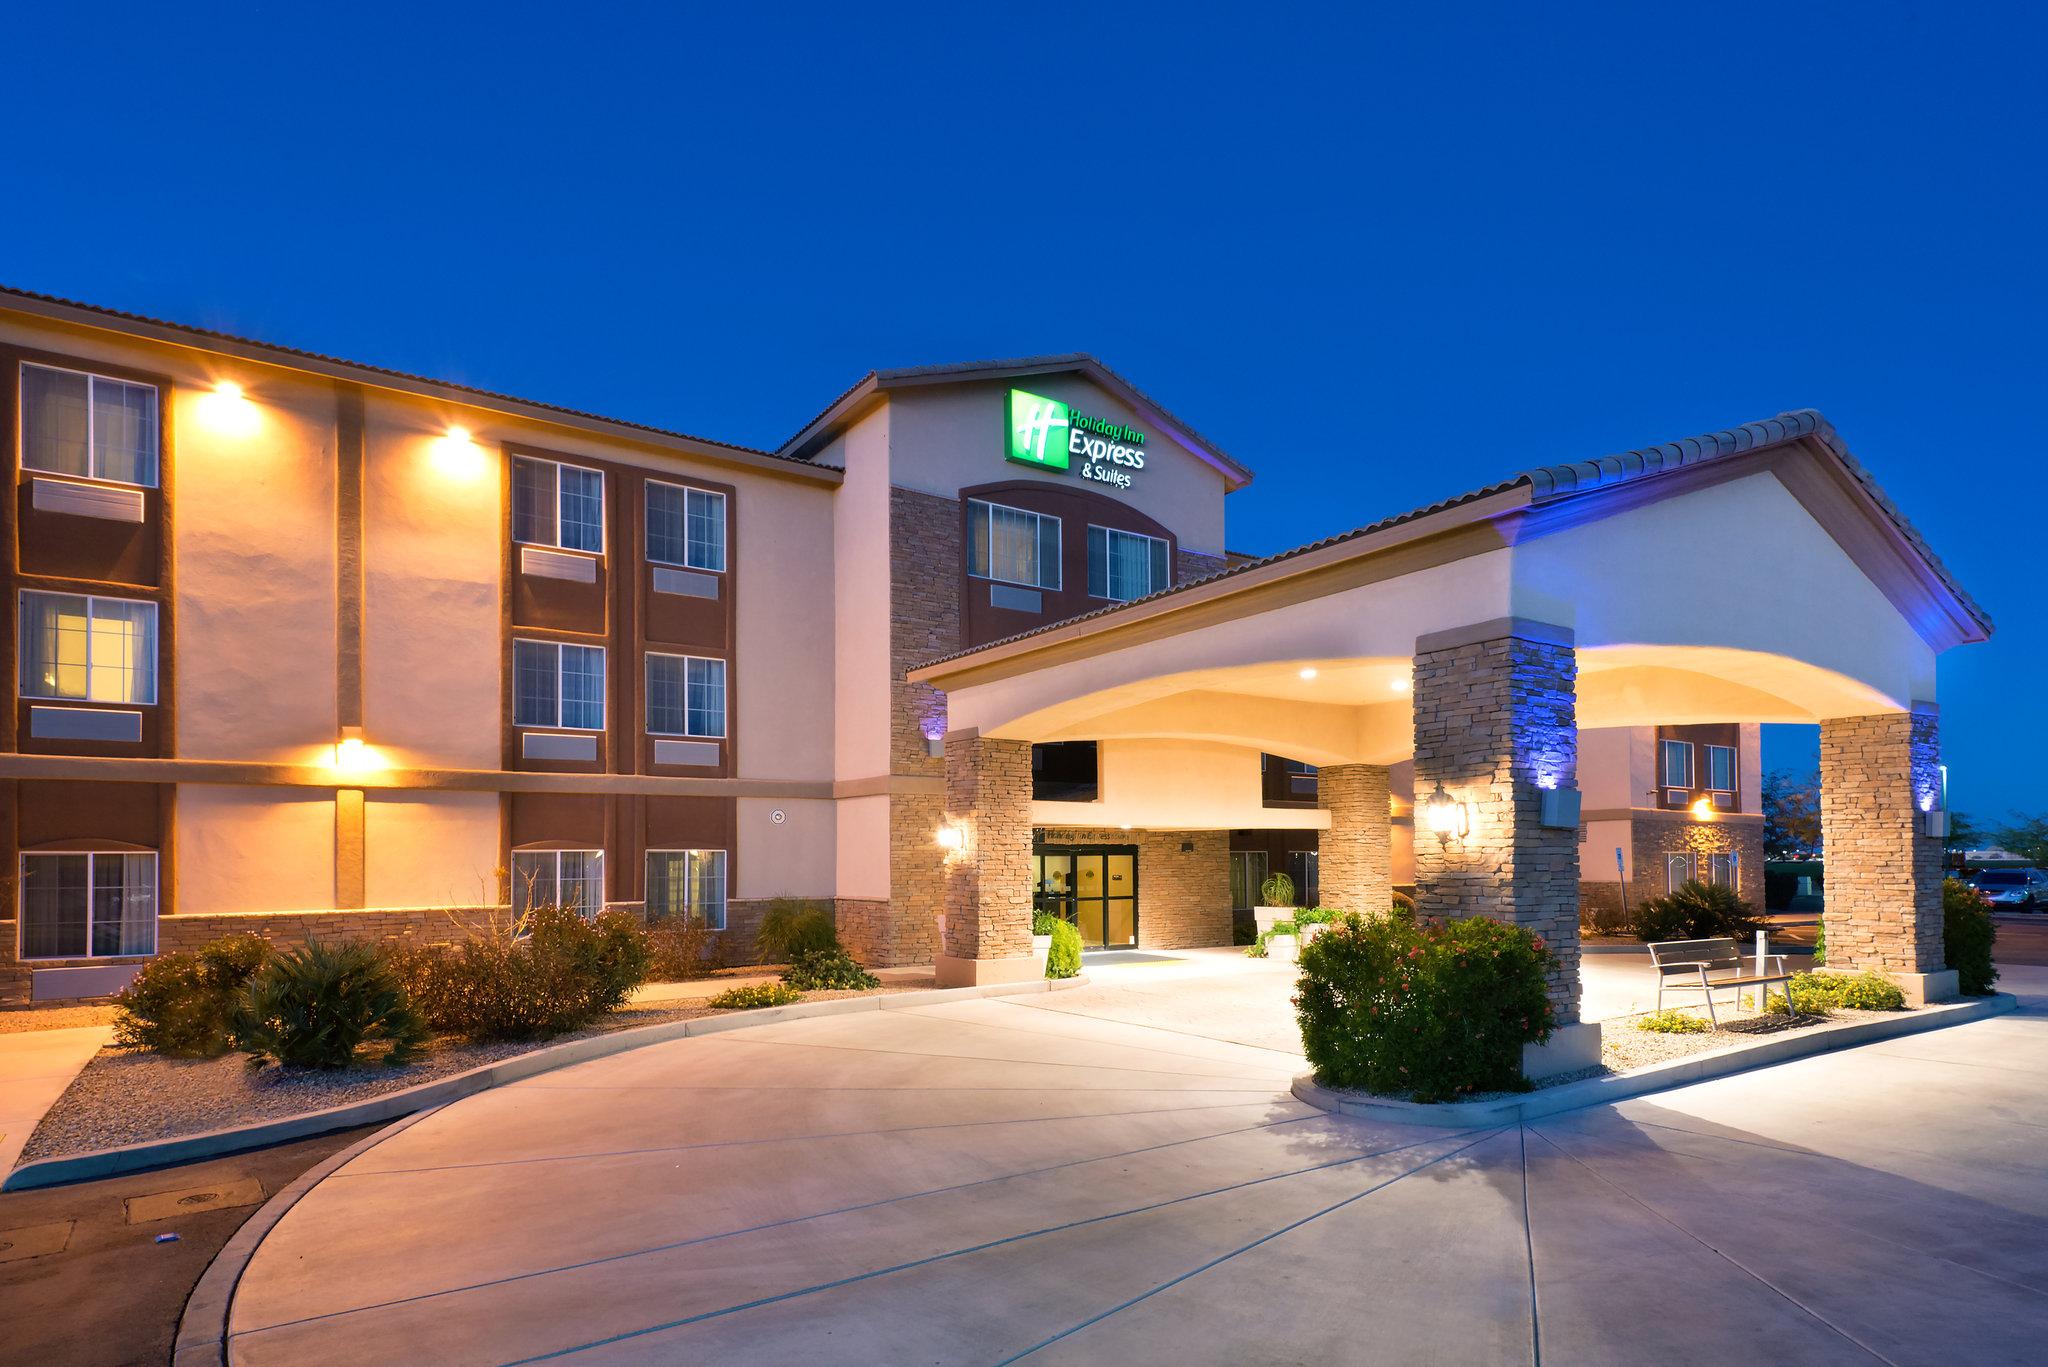 Holiday Inn Express & Suites Casa Grande, Arizona in Casa Grande, AZ